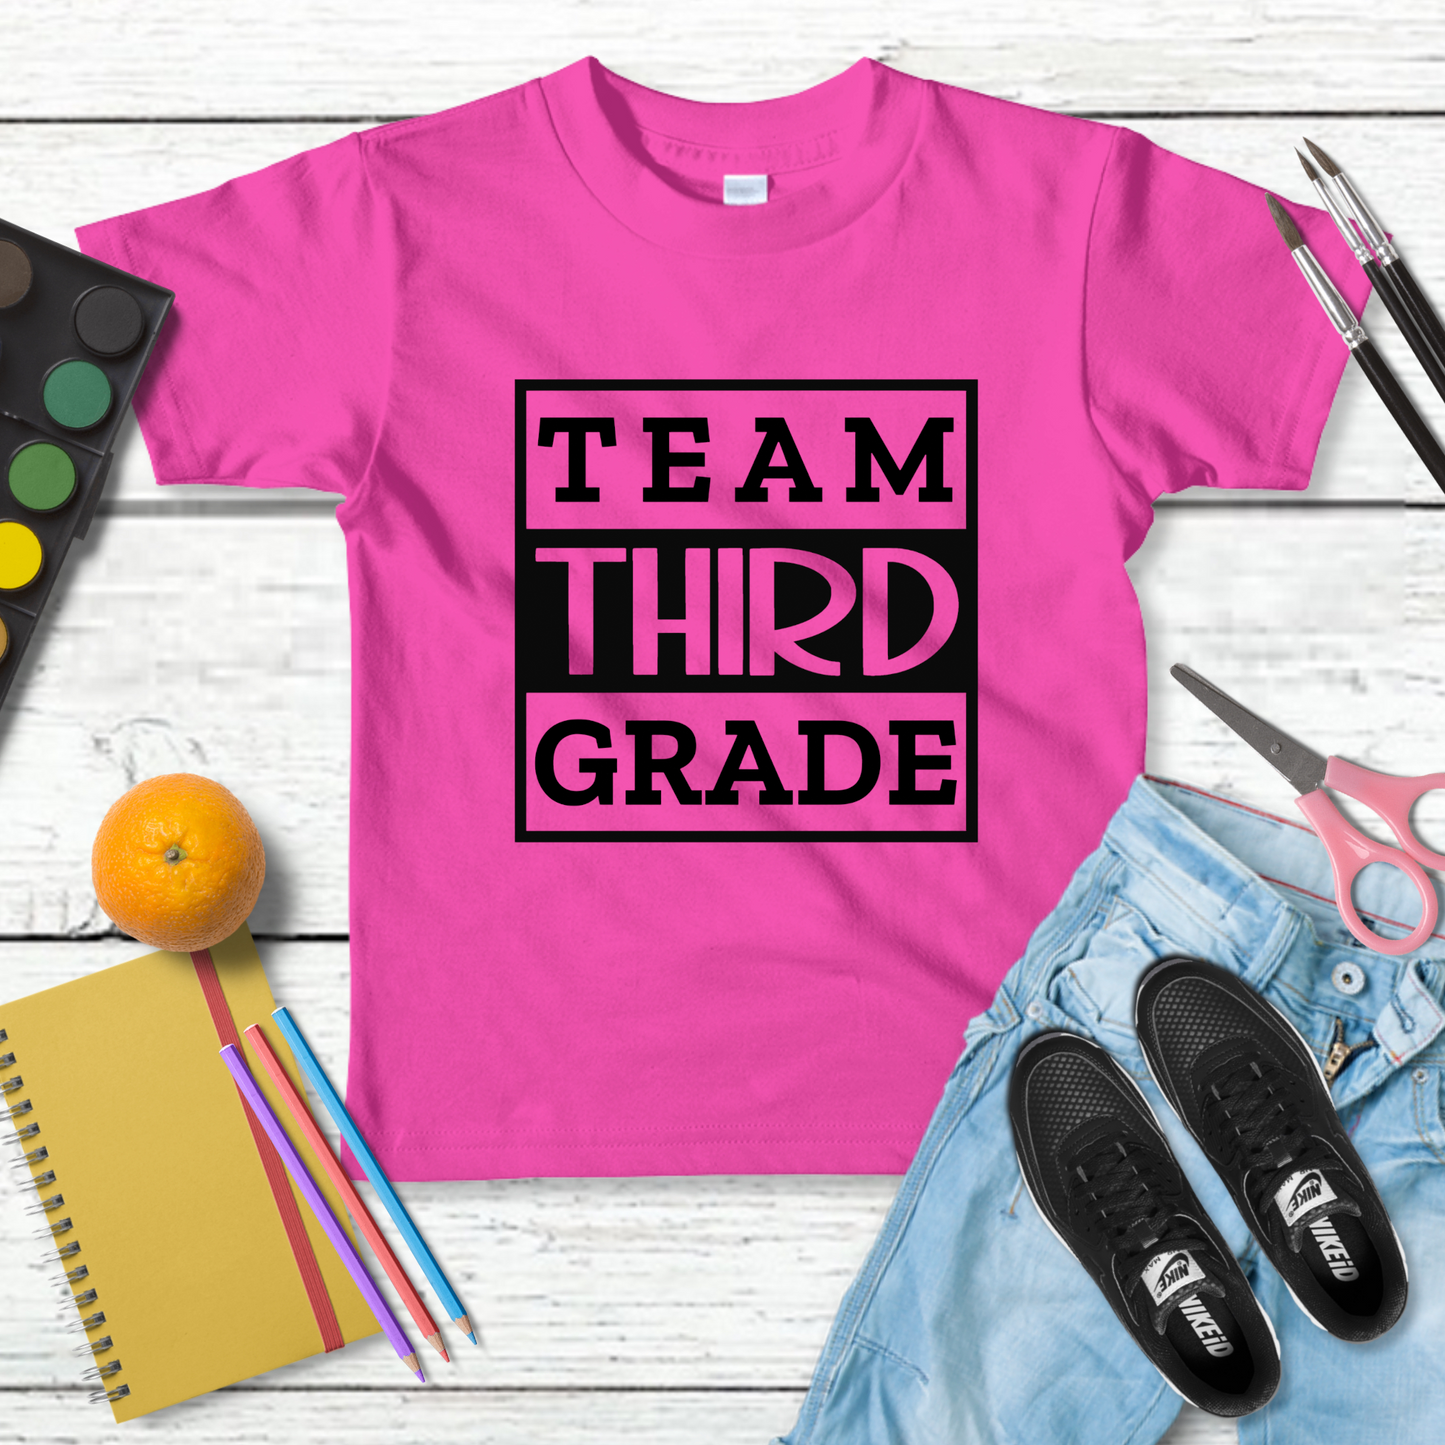 Team Third Grade Youth Cotton T-shirt